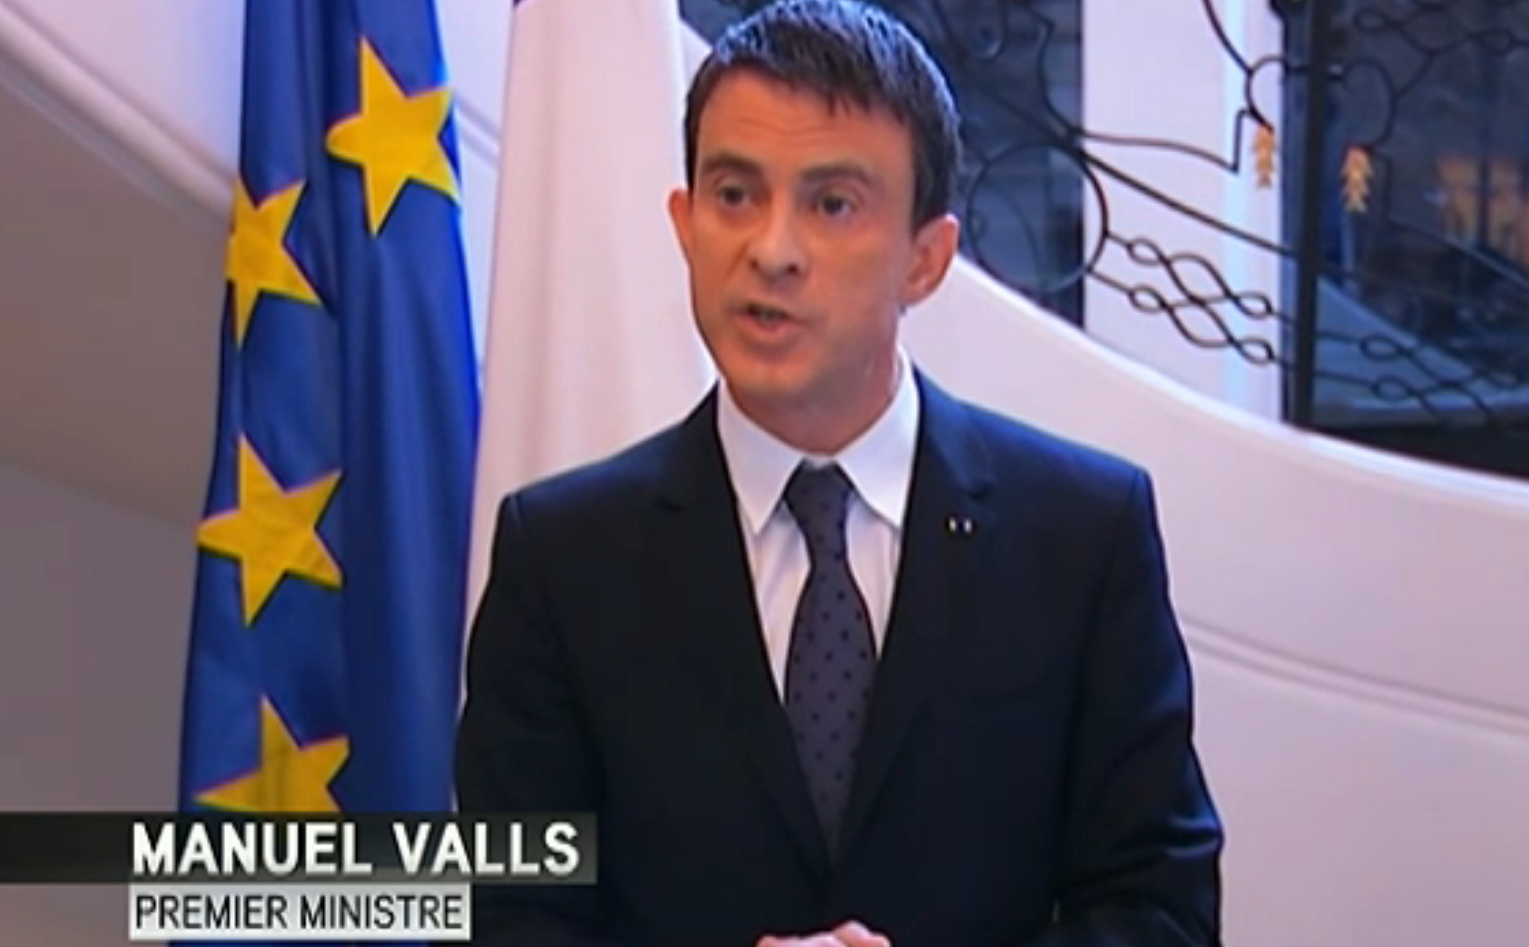 France's PM Manuel Valls